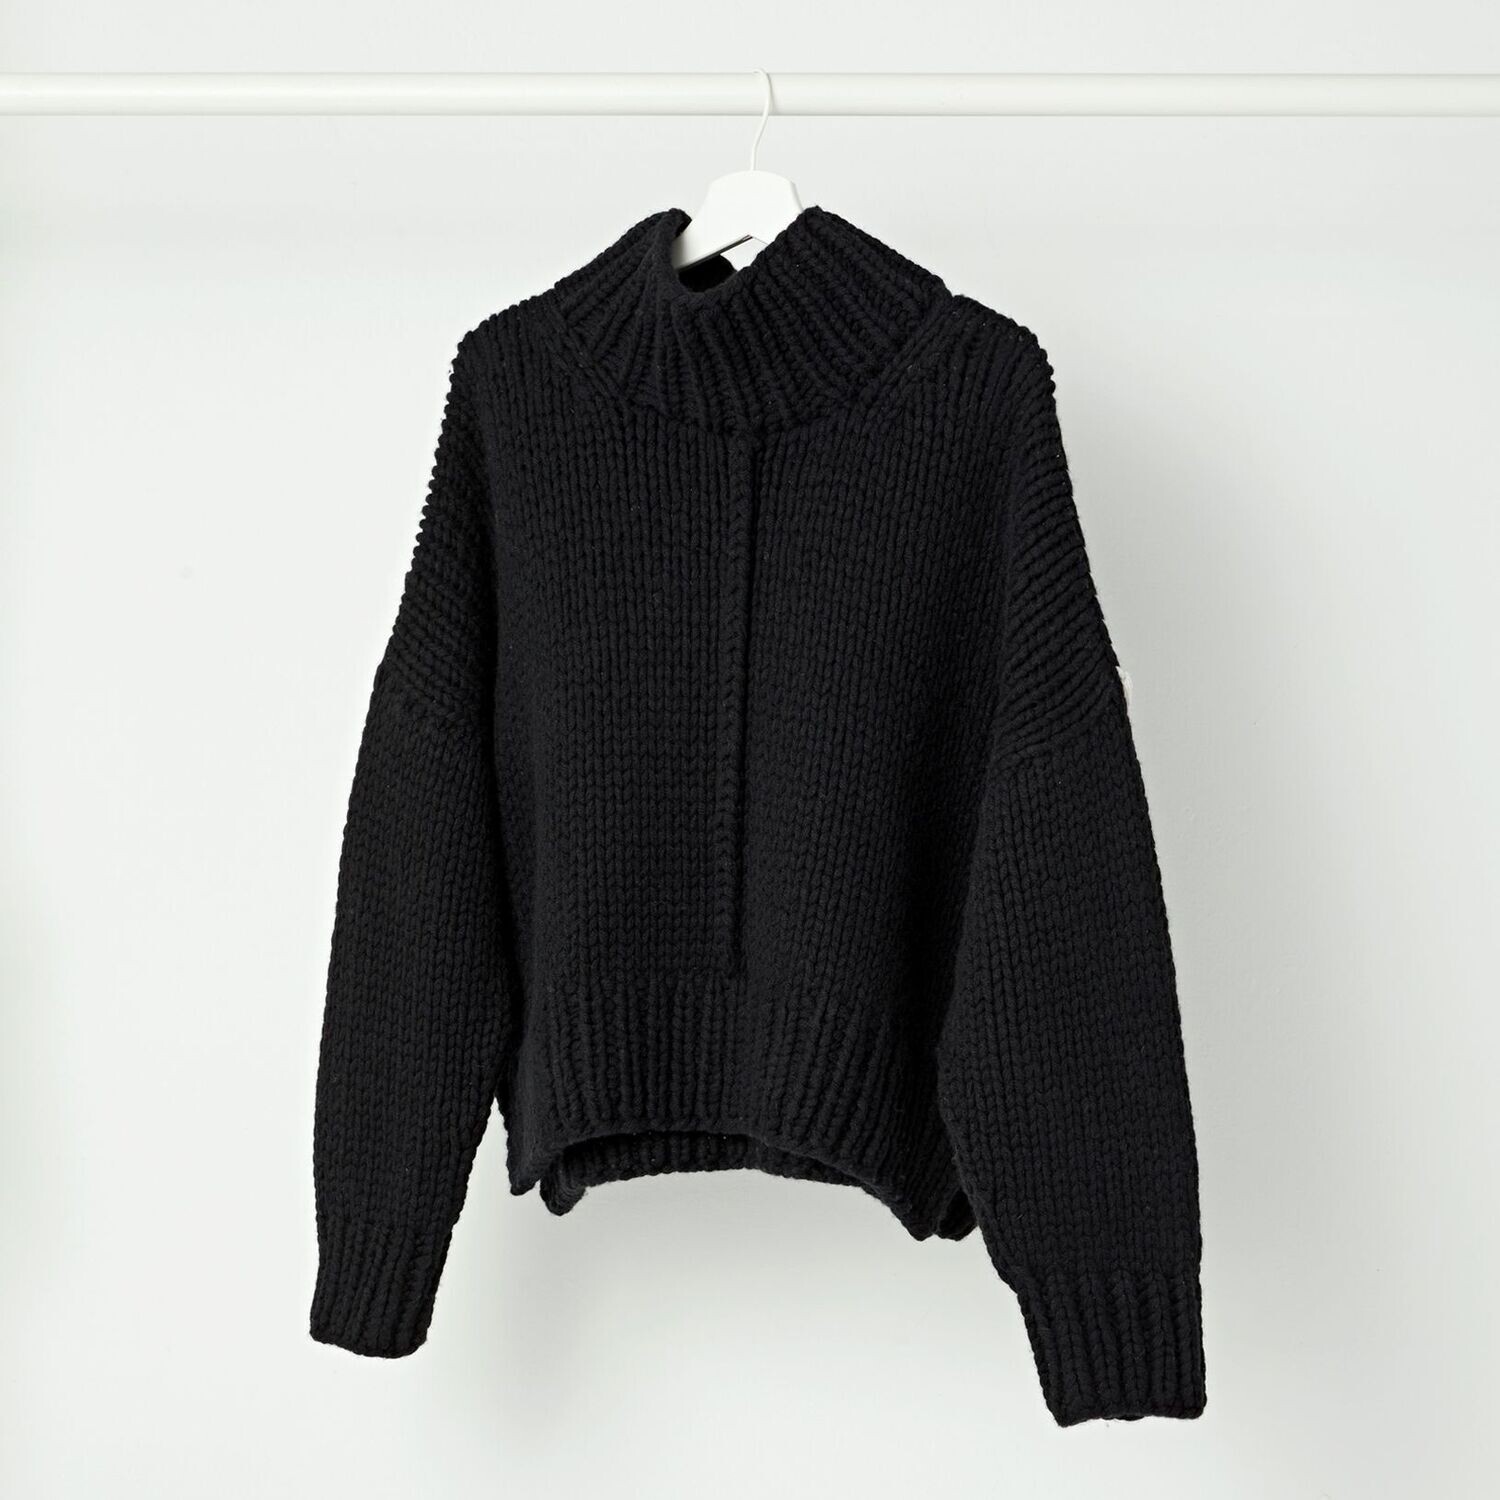 Oversize Turtleneck-Sweater MIA SHORT (Kaschmir-Mix), Farbe: schwarz, Größe: M/L